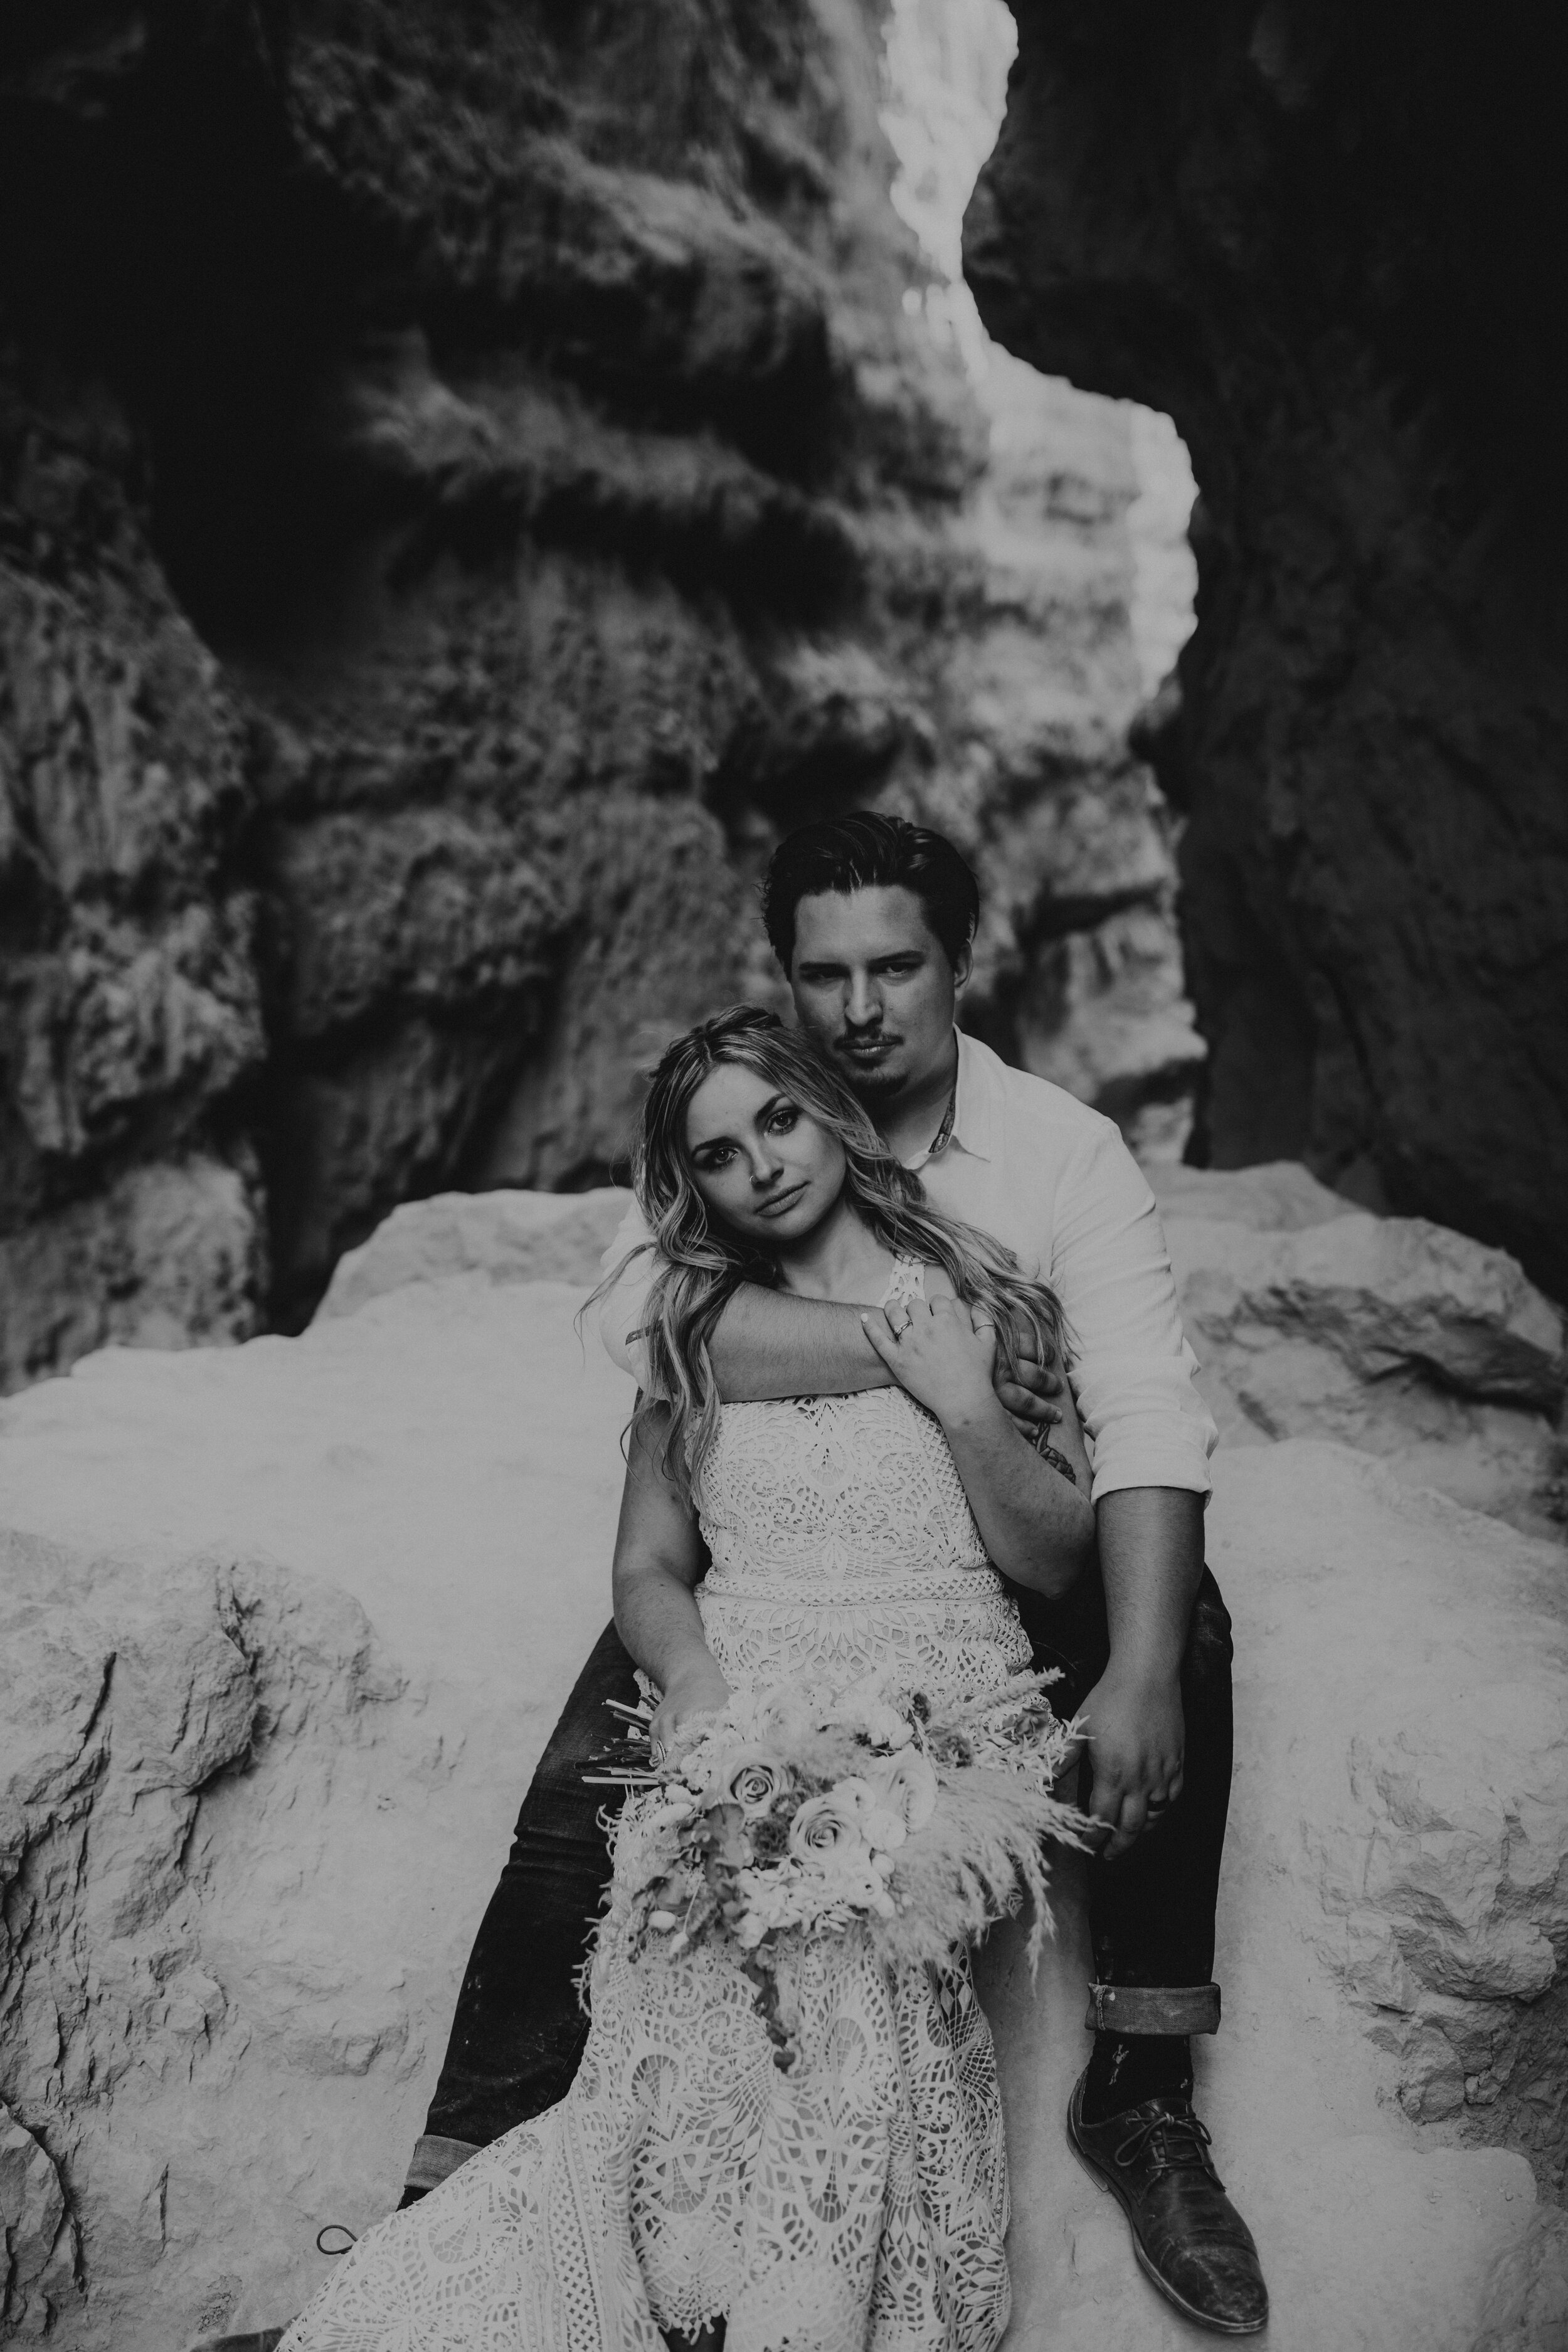 Bryce Canyon National Park wedding photographer southern Utah elopement photographer Moab elopement Zion wedding photographer #utahphotographer #elopementphotographer red rock wedding